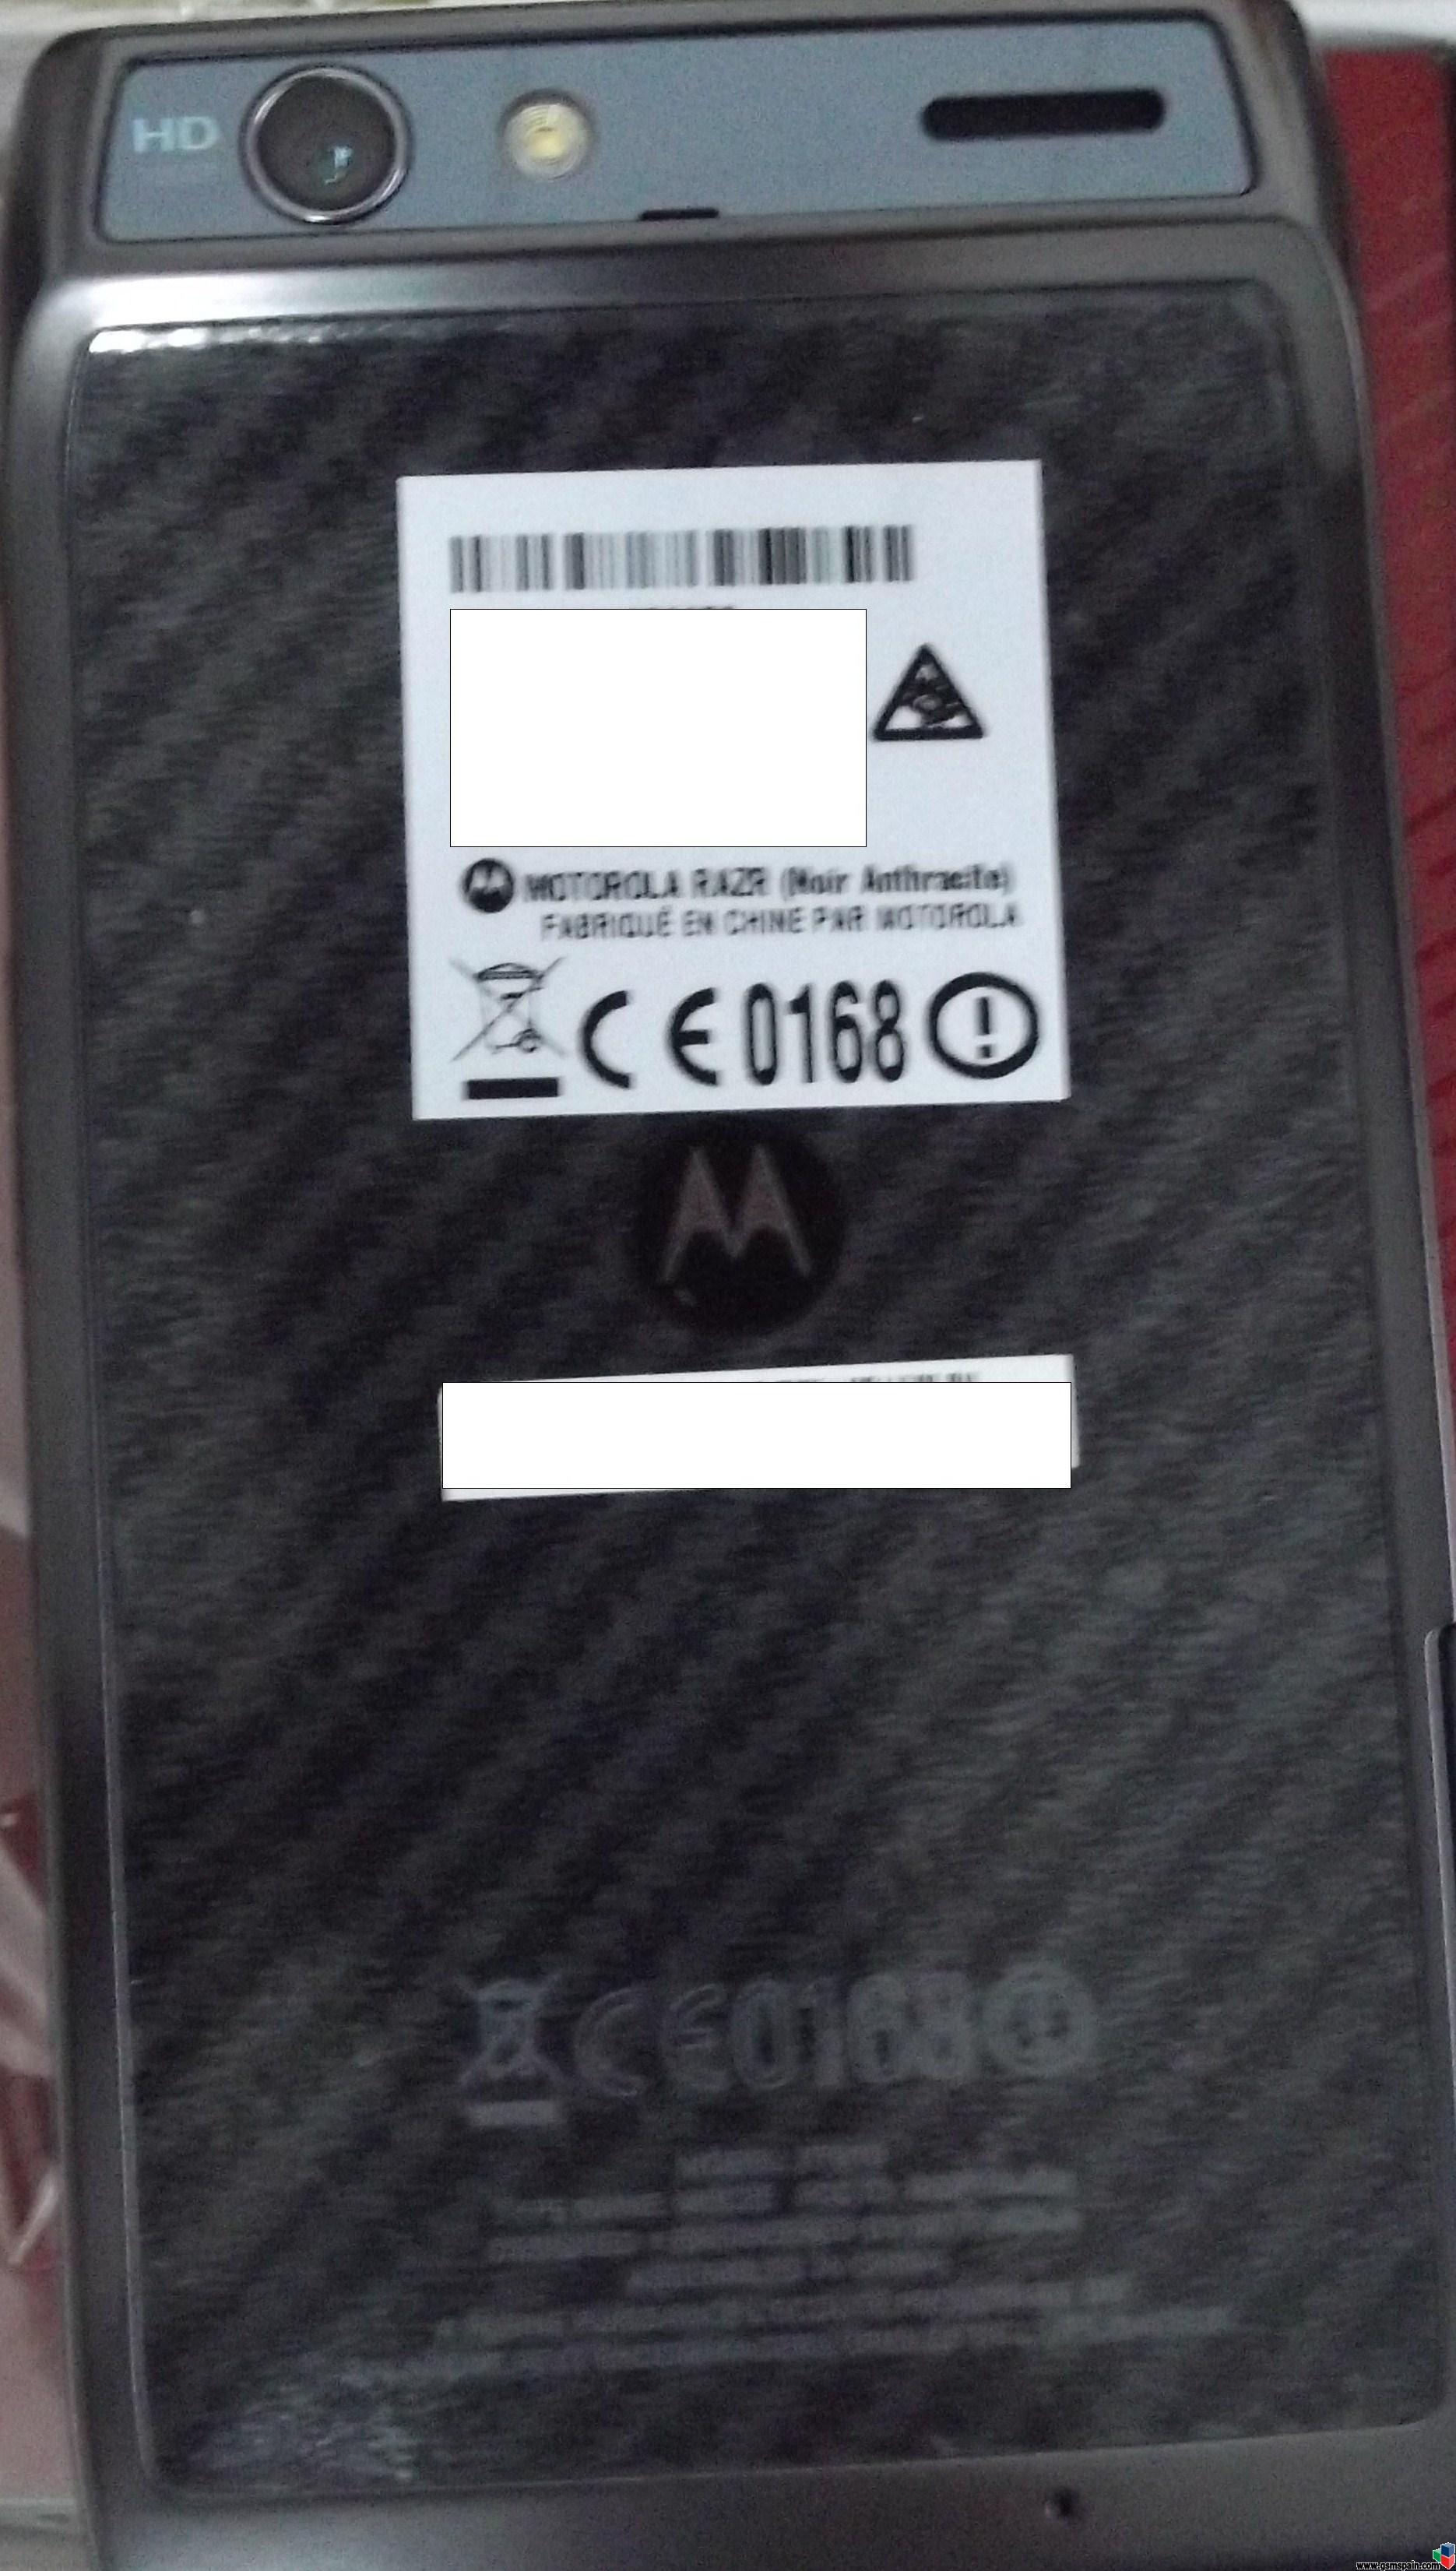 [FOTOREVIEW] NEW Motorola Razr whit Android!